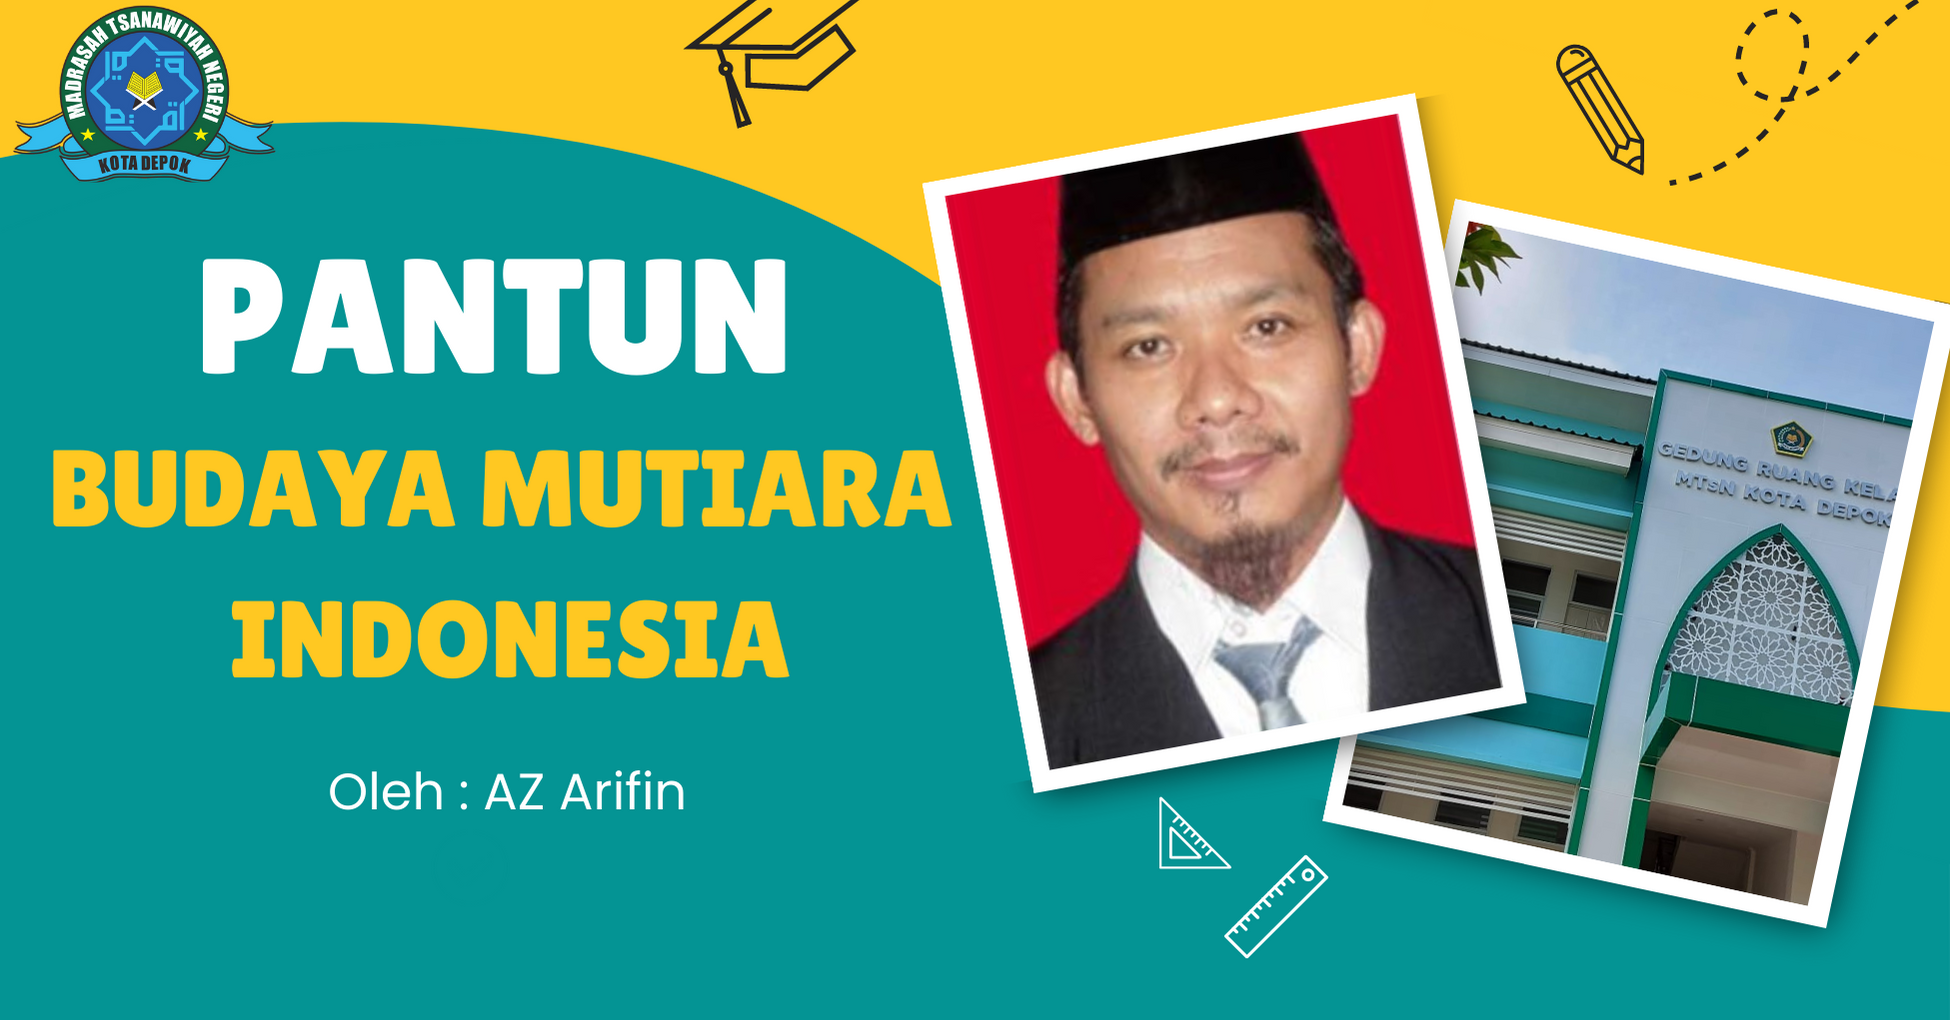 PANTUN BUDAYA MUTIARA INDONESIA